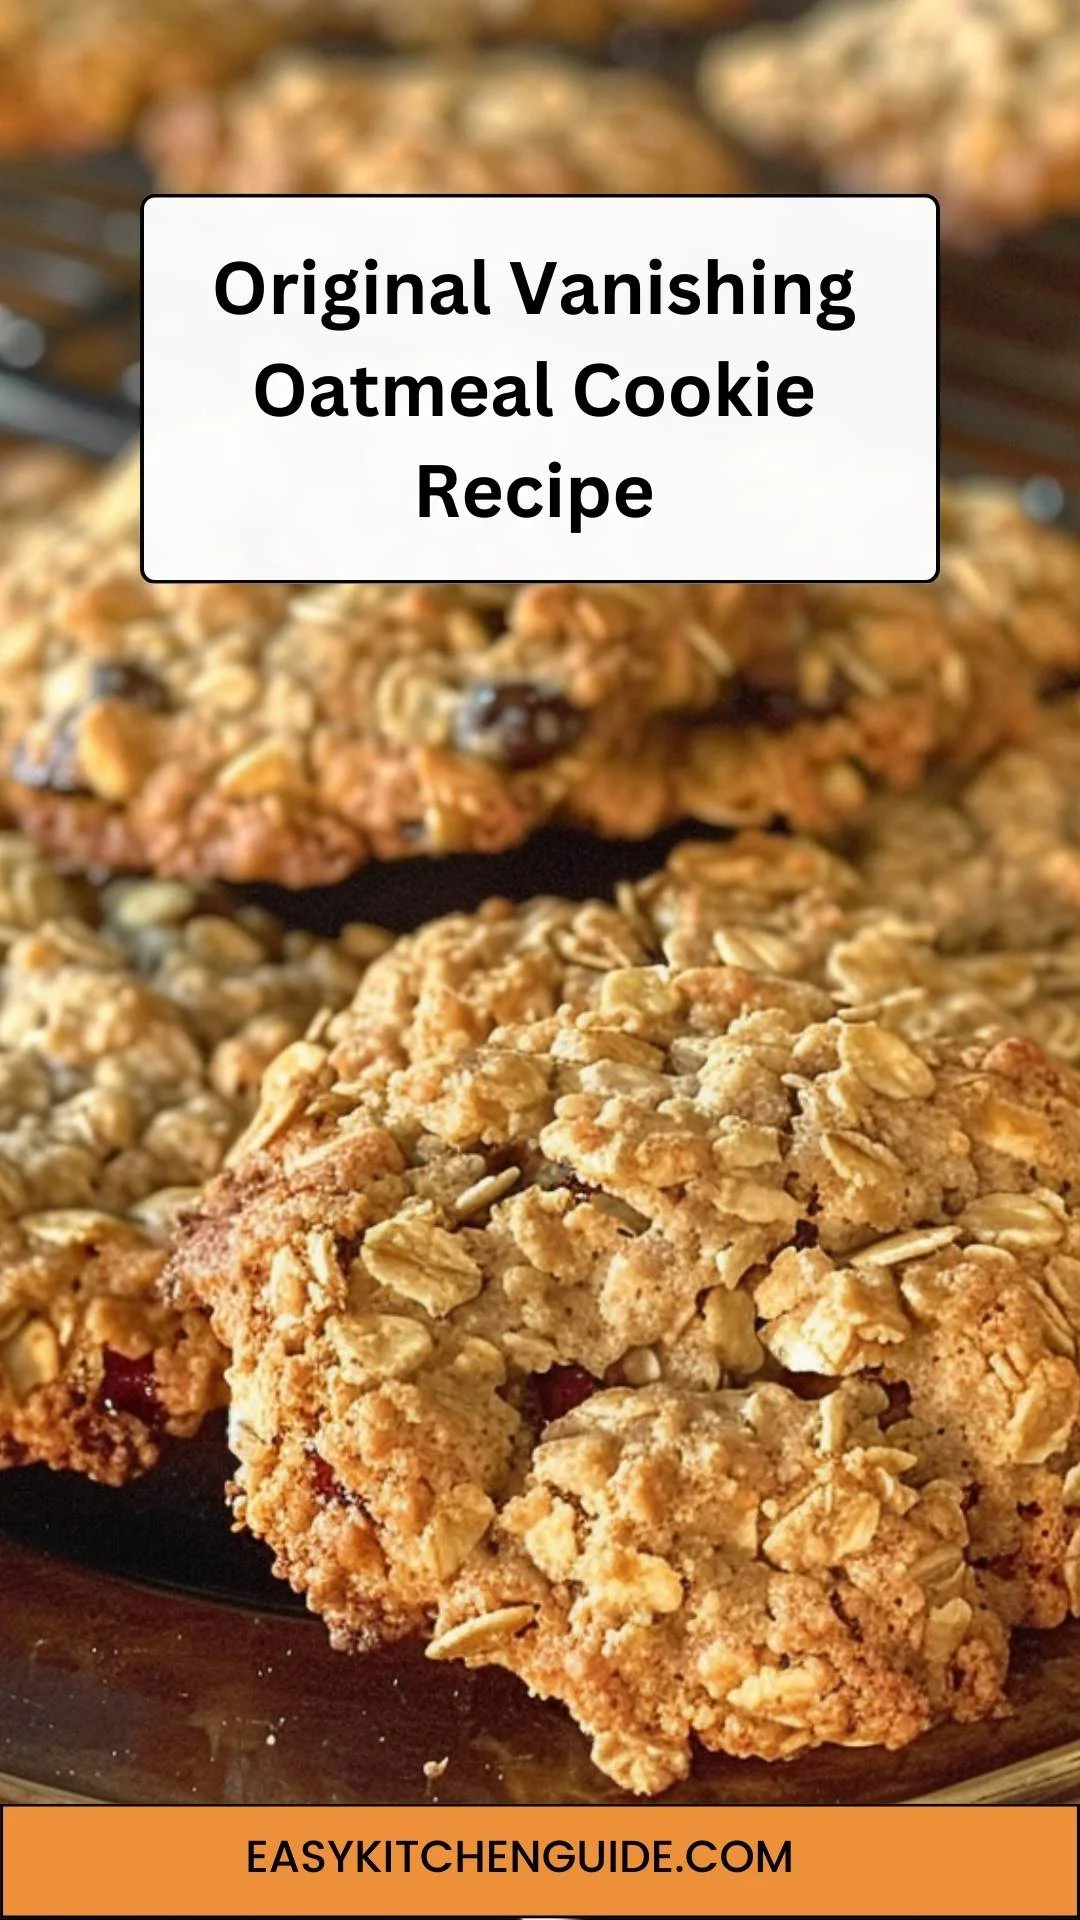 Original Vanishing Oatmeal Cookie Recipe